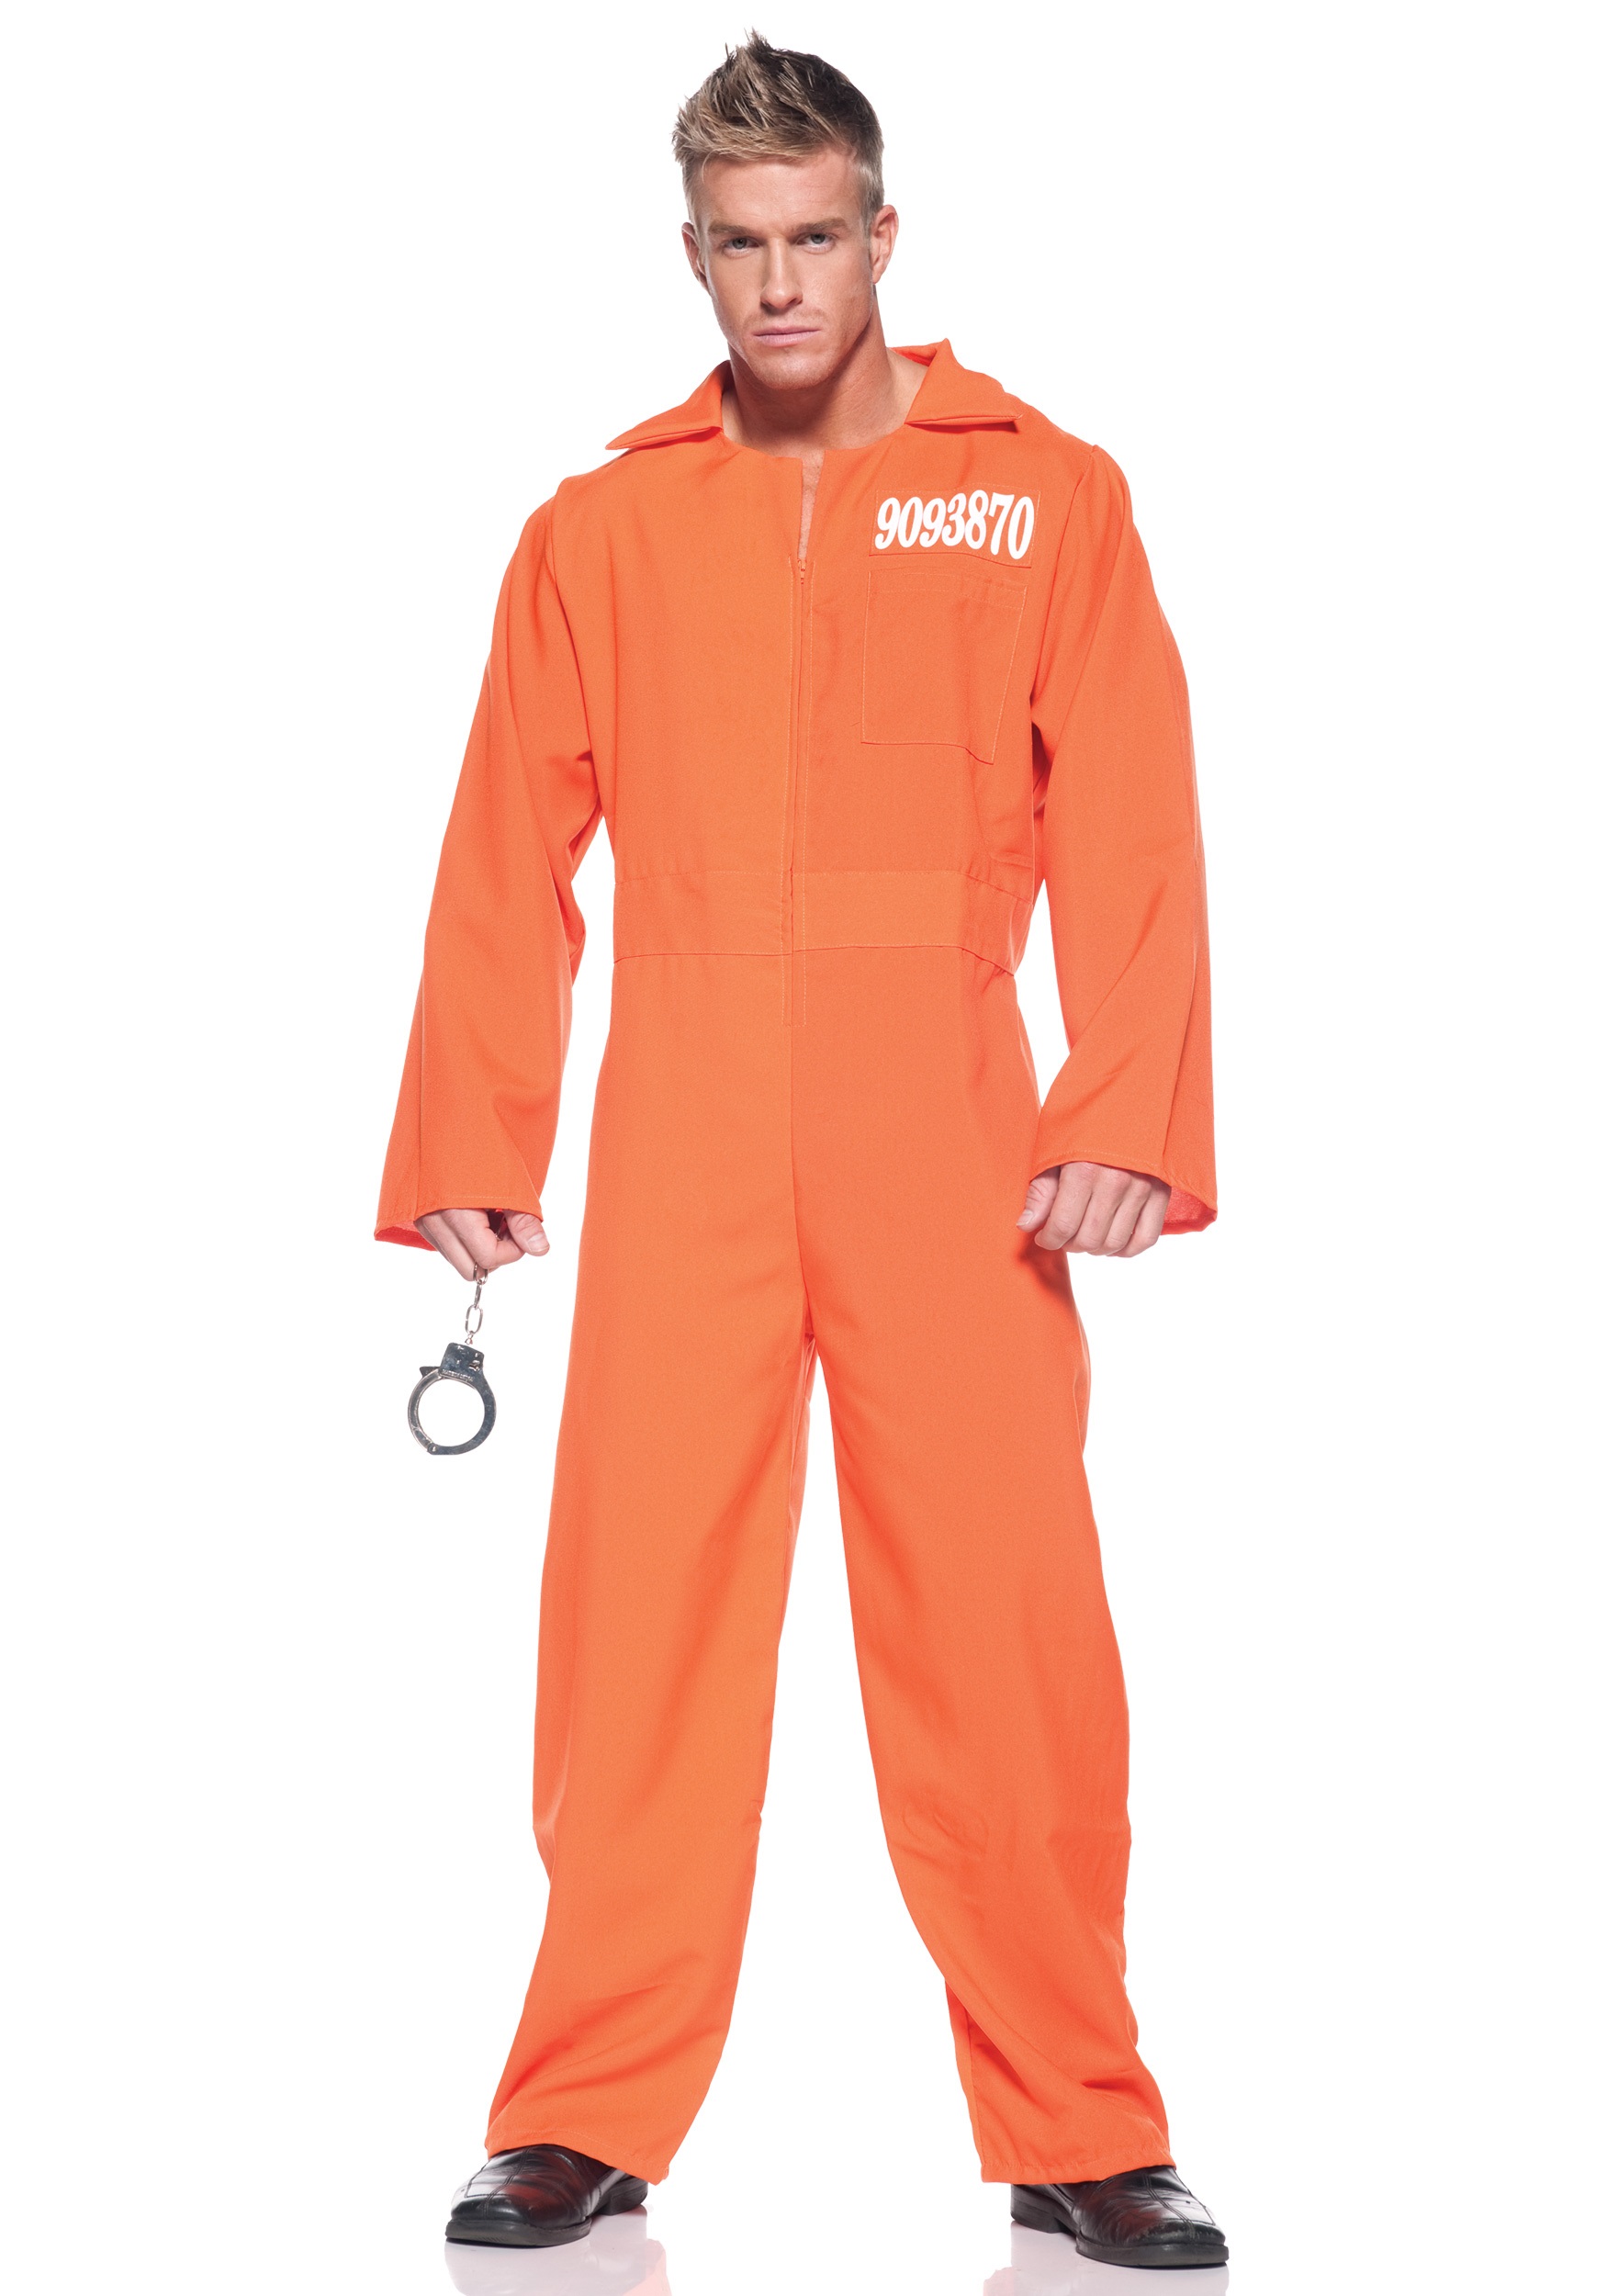 Plus Size Prison Jumpsuit Costume For Adults